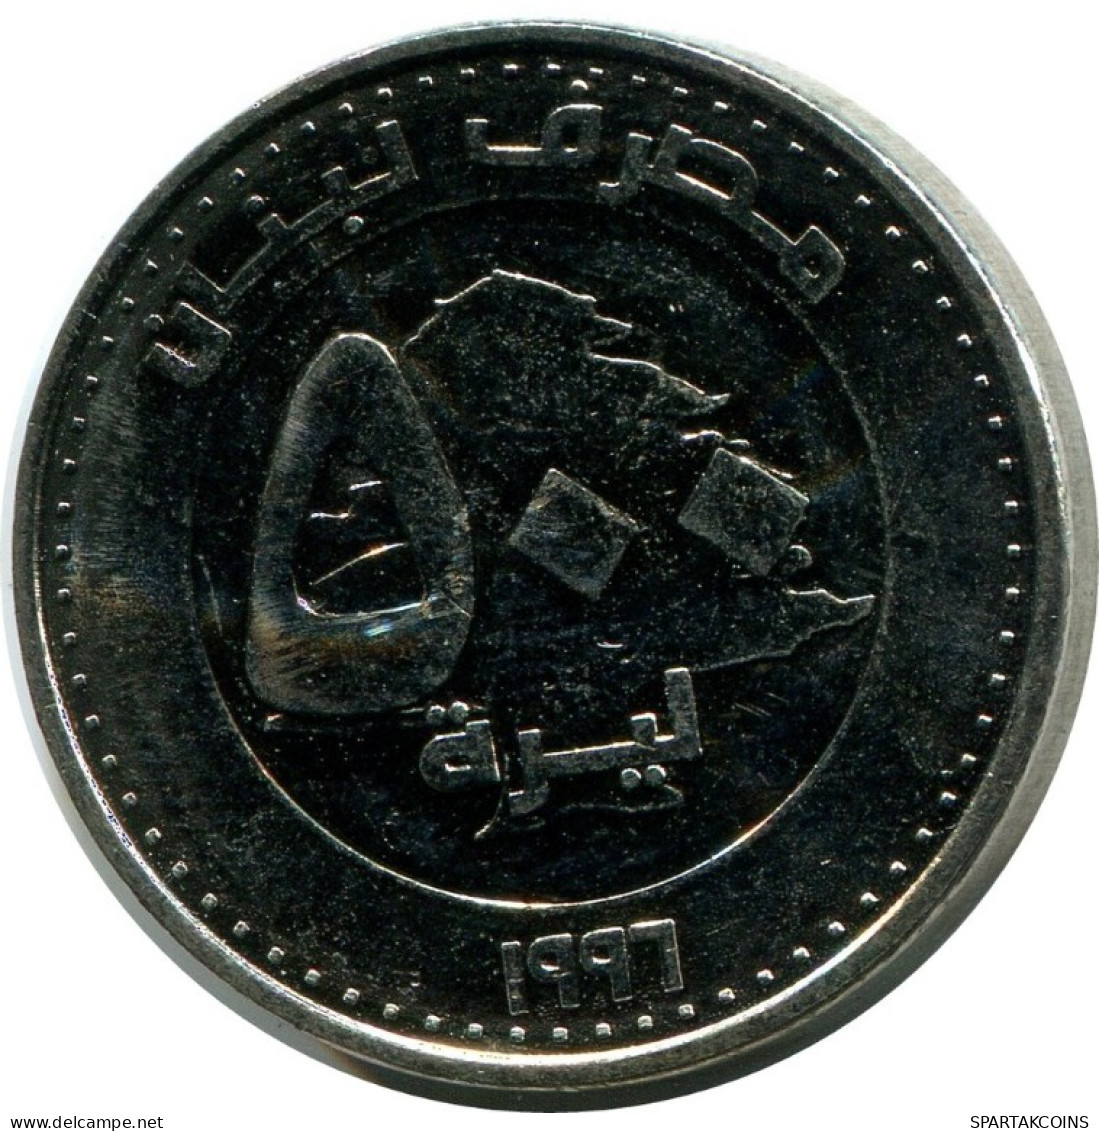 500 LIVRES 1996 LEBANON Coin #AH746.U.A - Lebanon